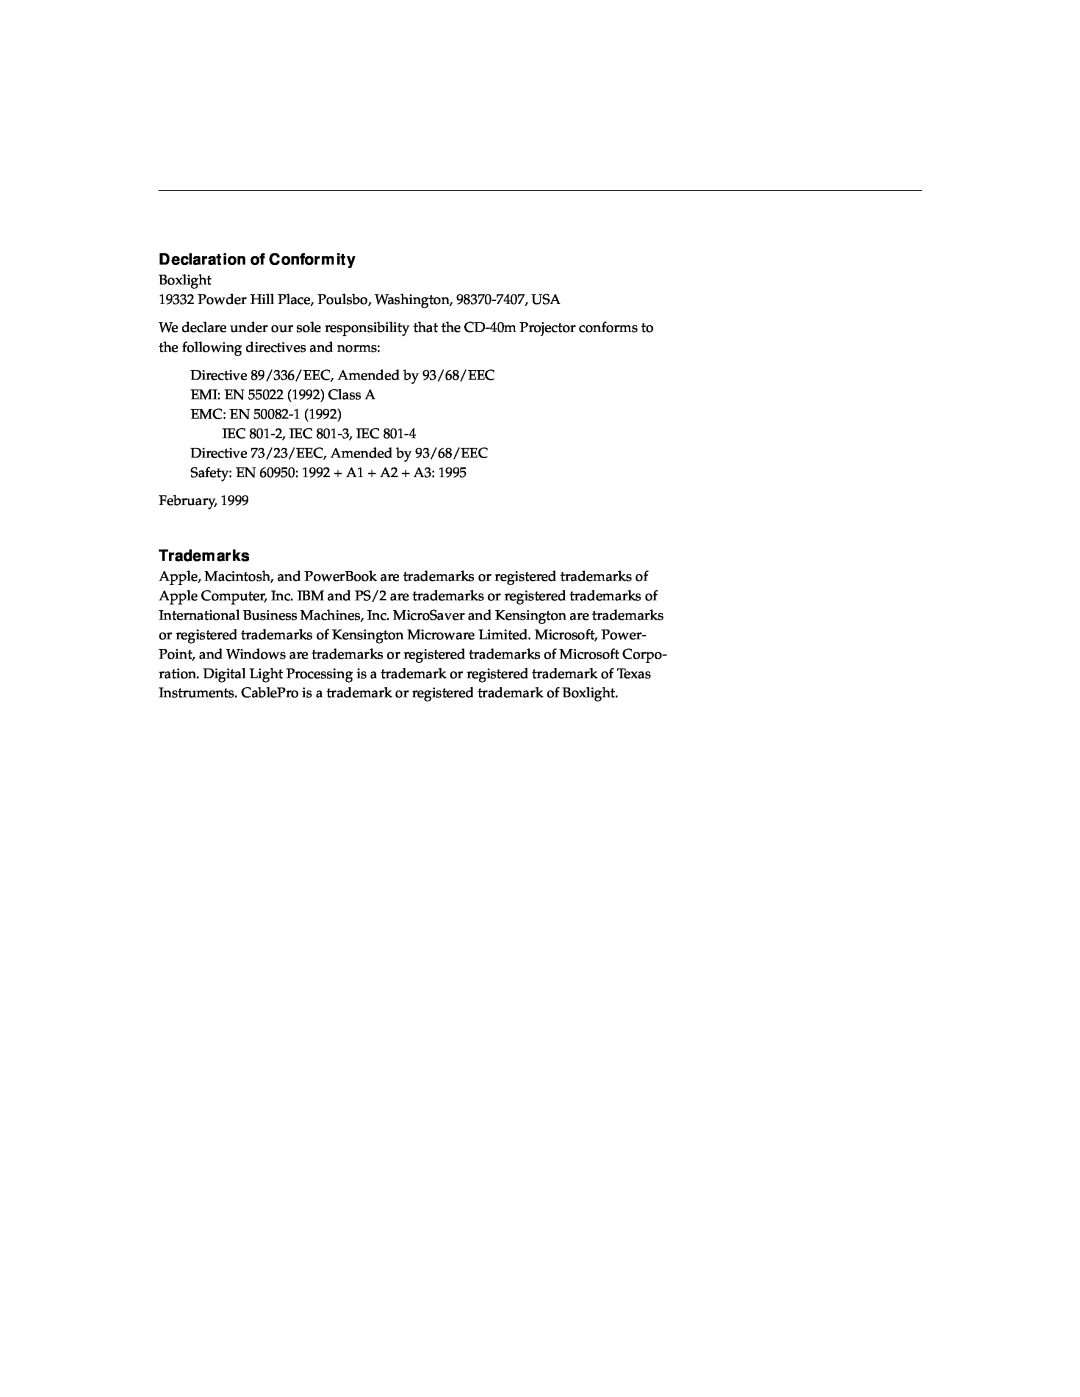 BOXLIGHT CD-40m manual Declaration of Conformity, Trademarks 